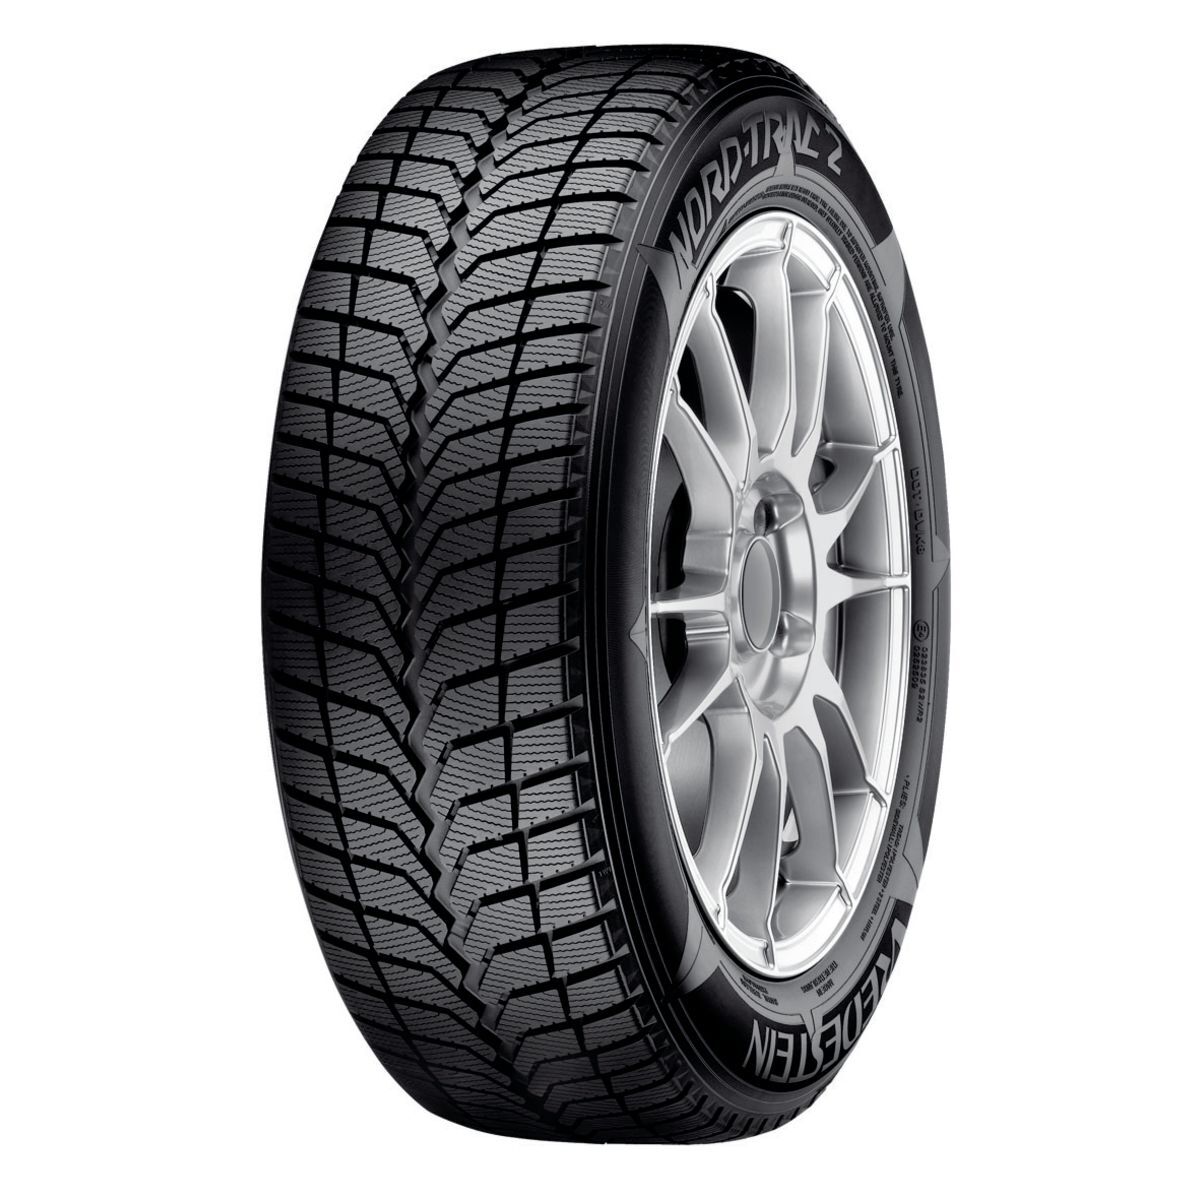 Neumáticos de invierno VREDESTEIN Nordtrac 2 225/50R17 XL 98T